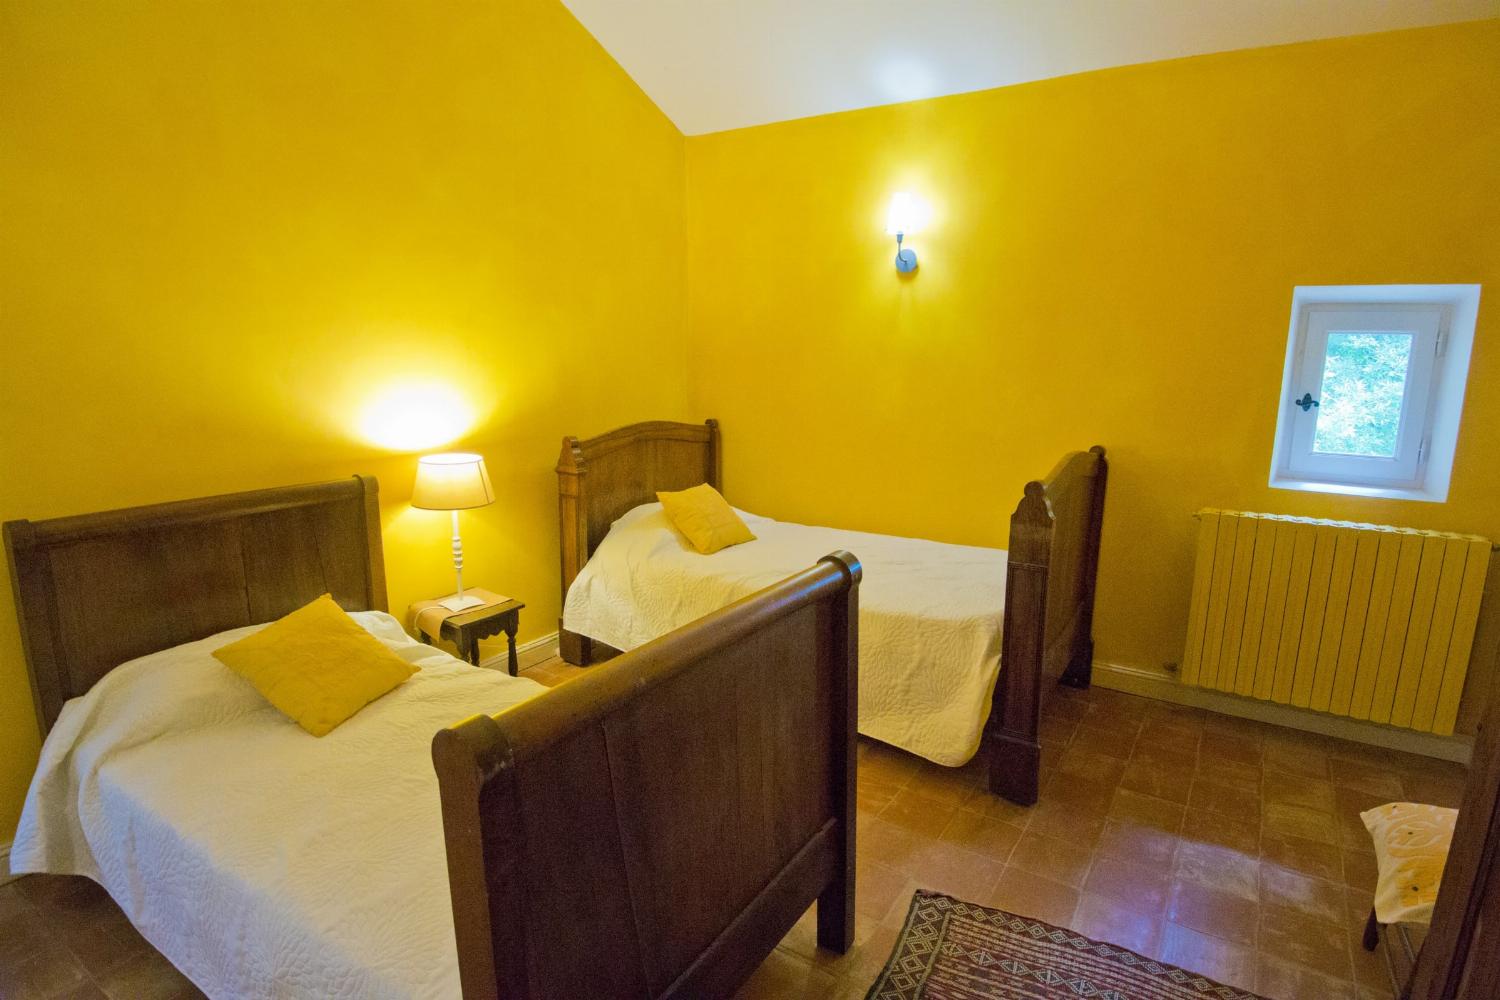 Bedroom | Rental home in Provence